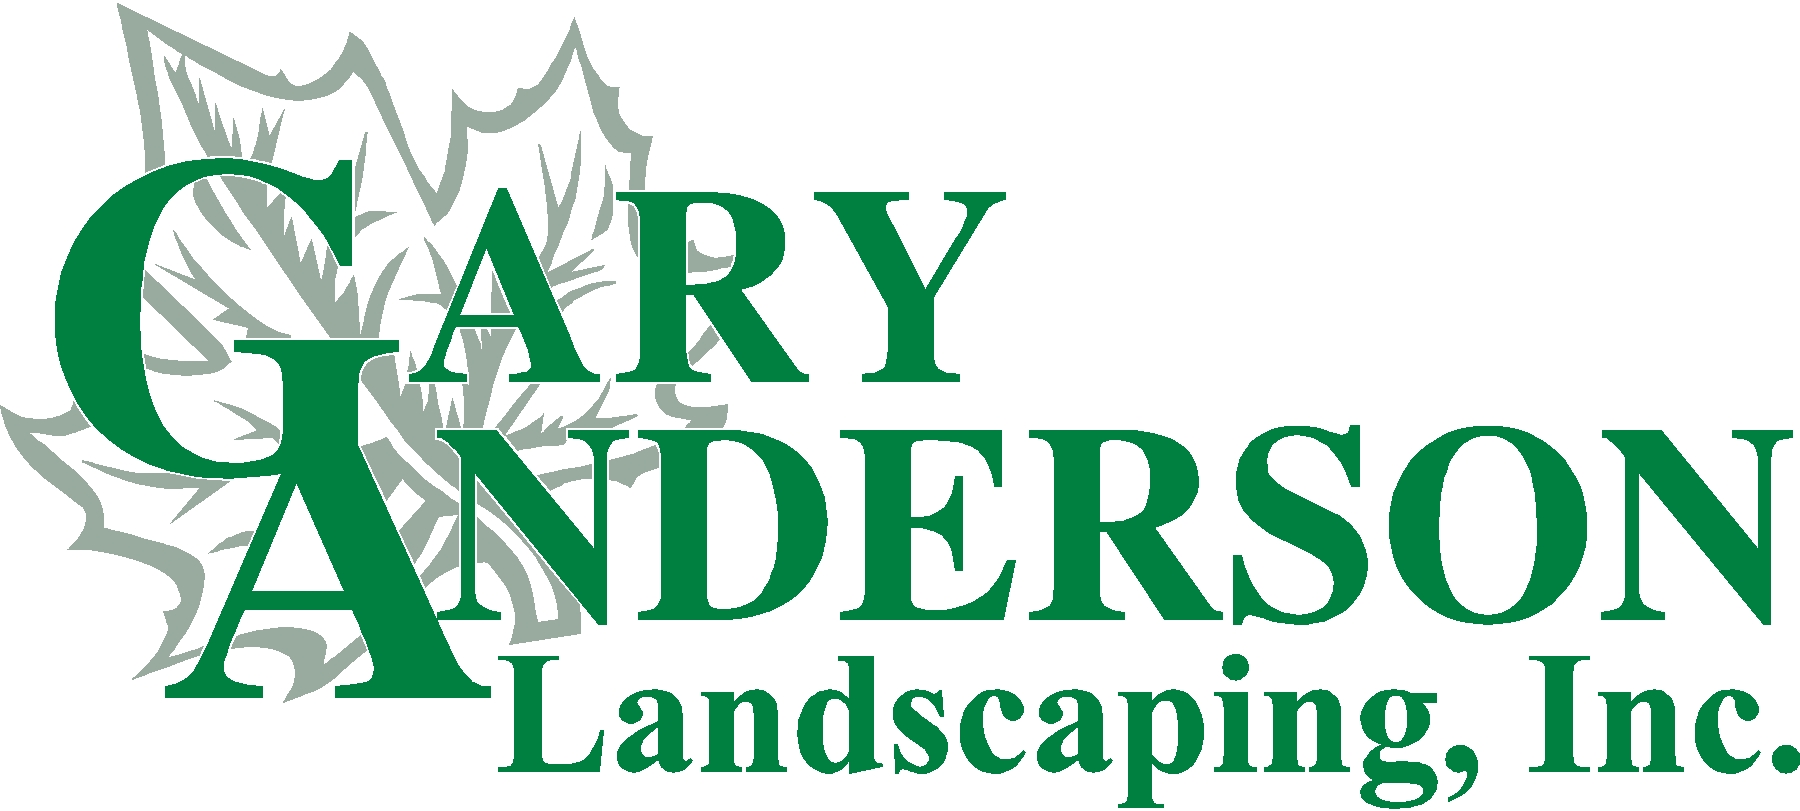 Gary John Anderson Landscaping, Inc. Logo